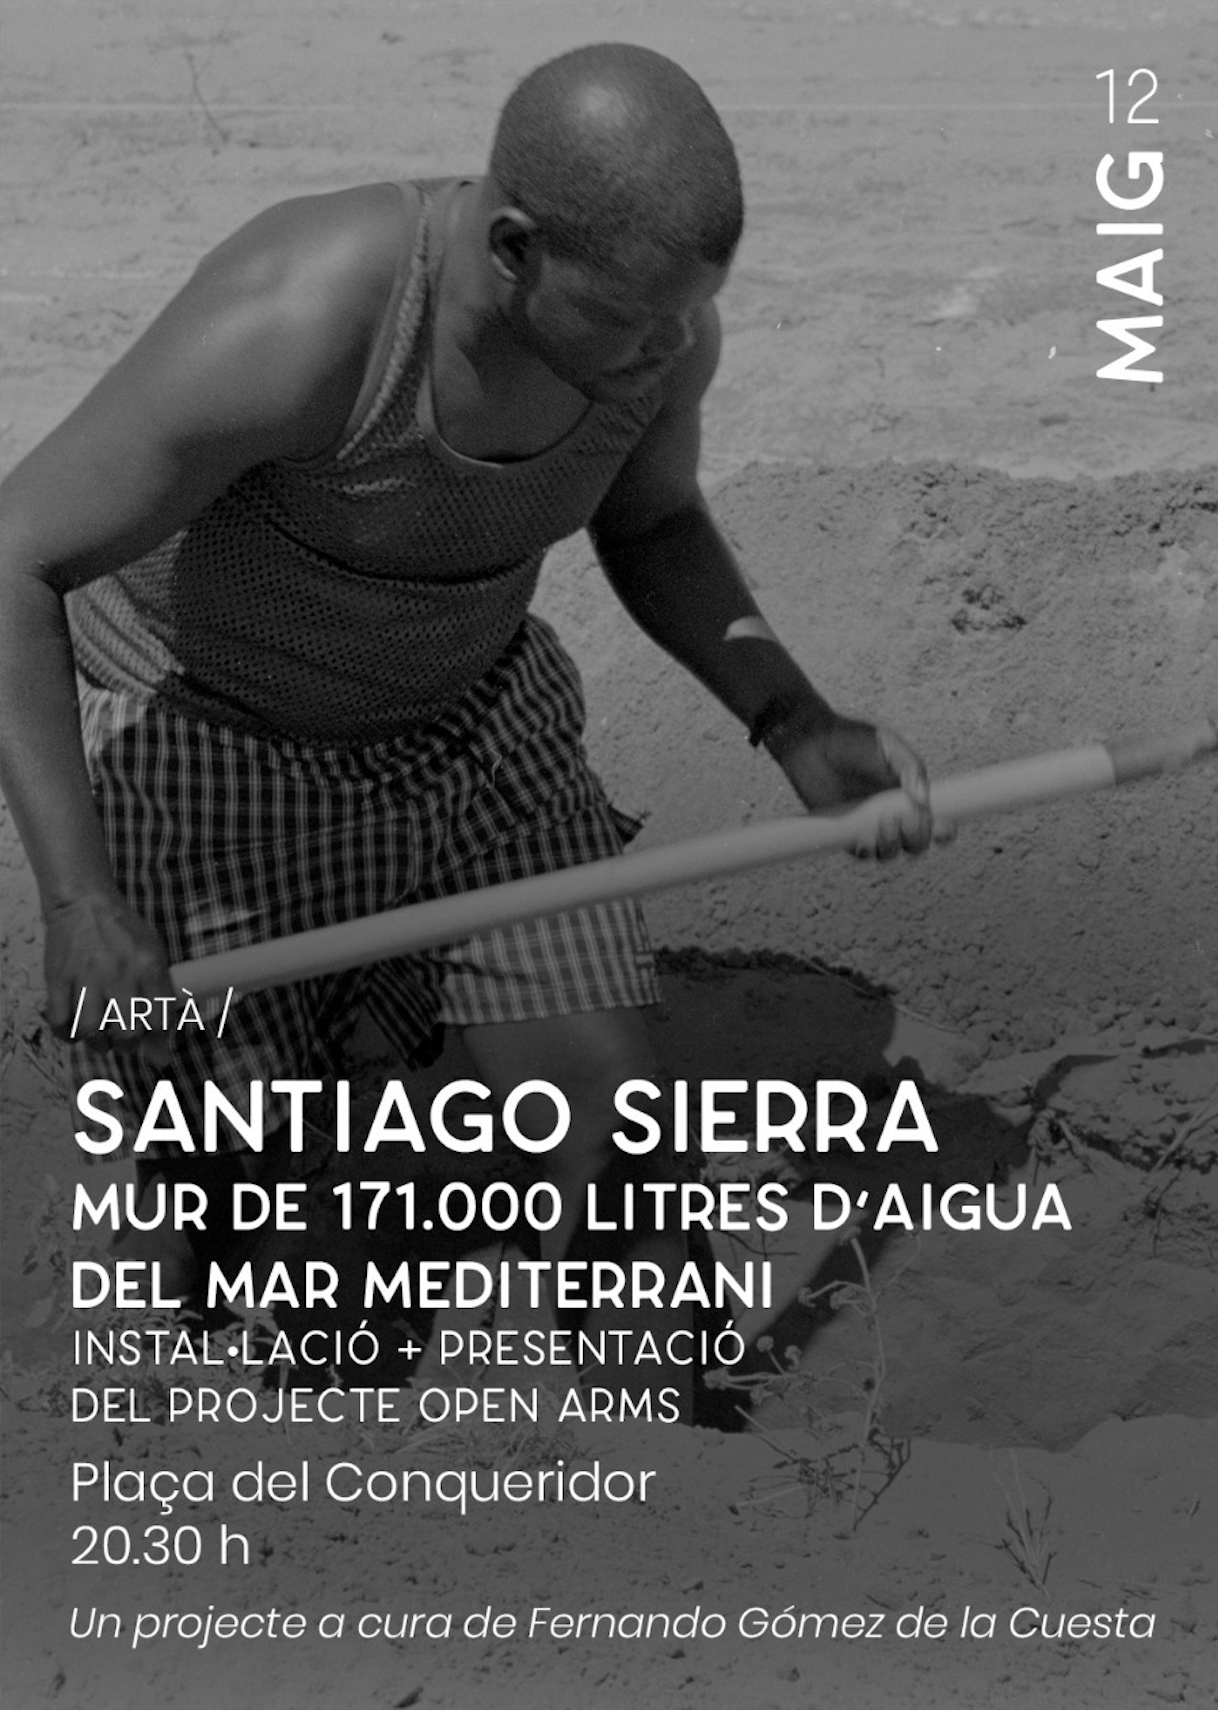 Santiago Sierra's new project in Mallorca